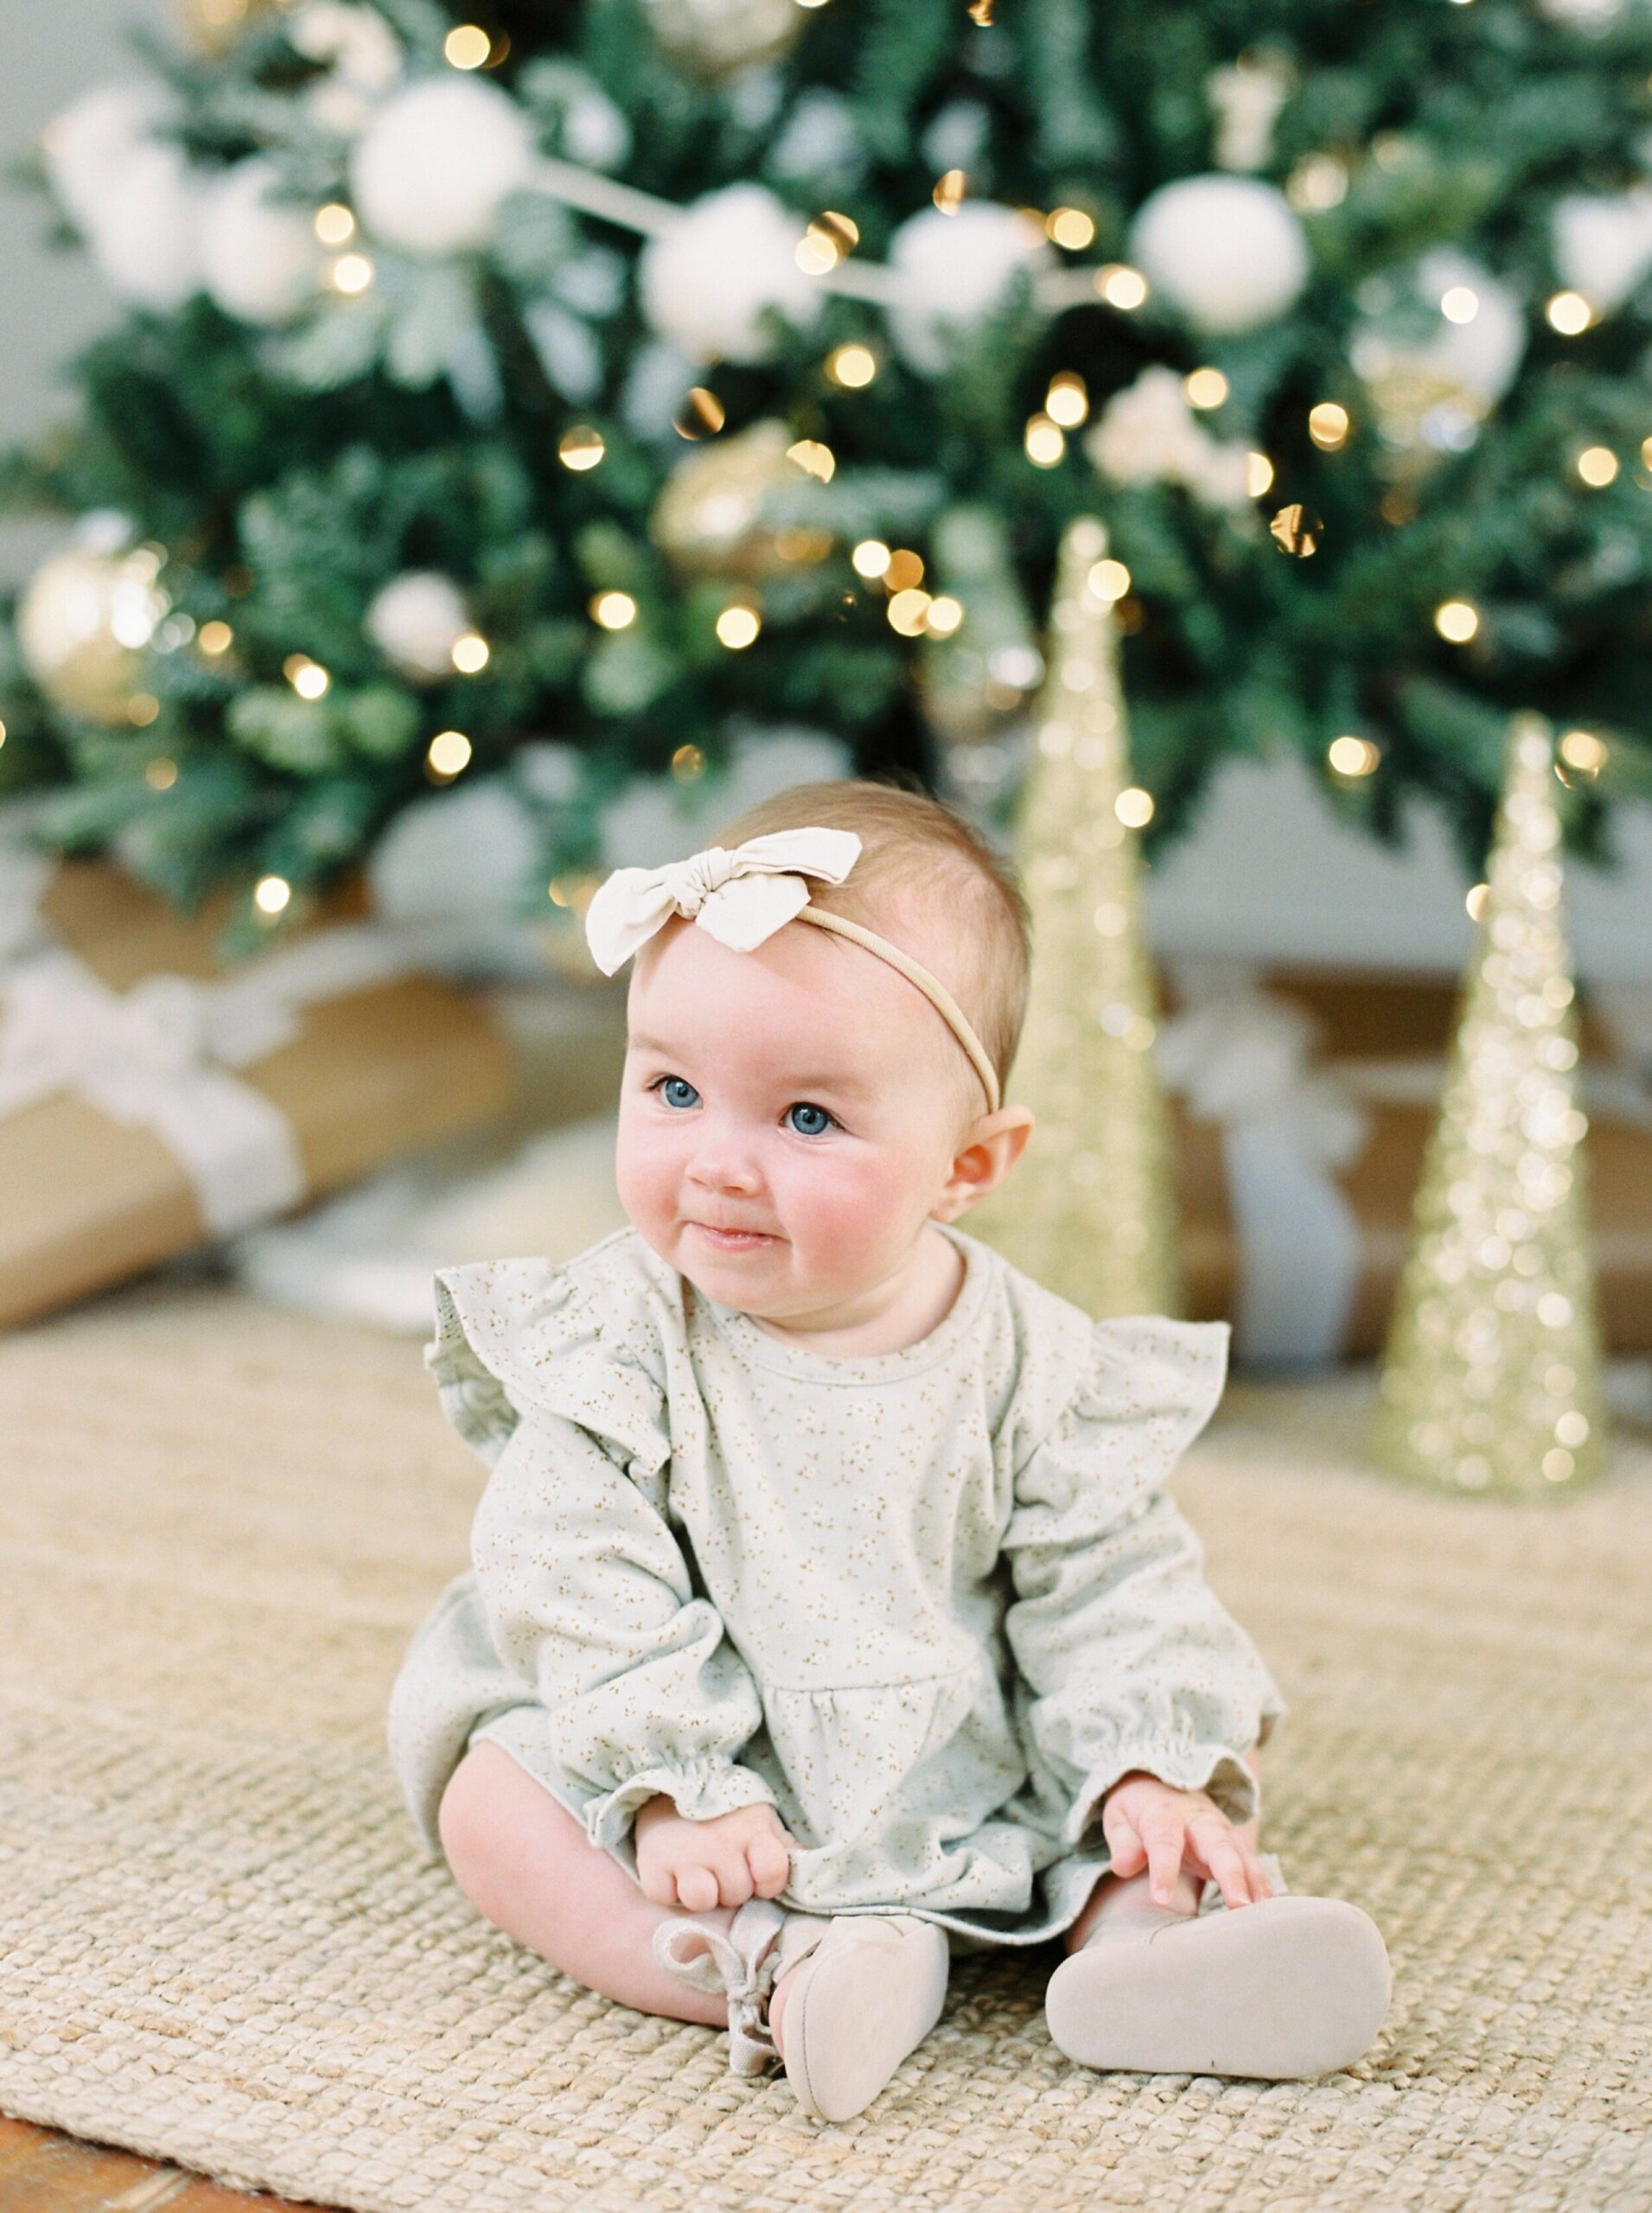  beautiful christmas holiday card photo set up | neutral holiday photos | calgary christmas mini session 